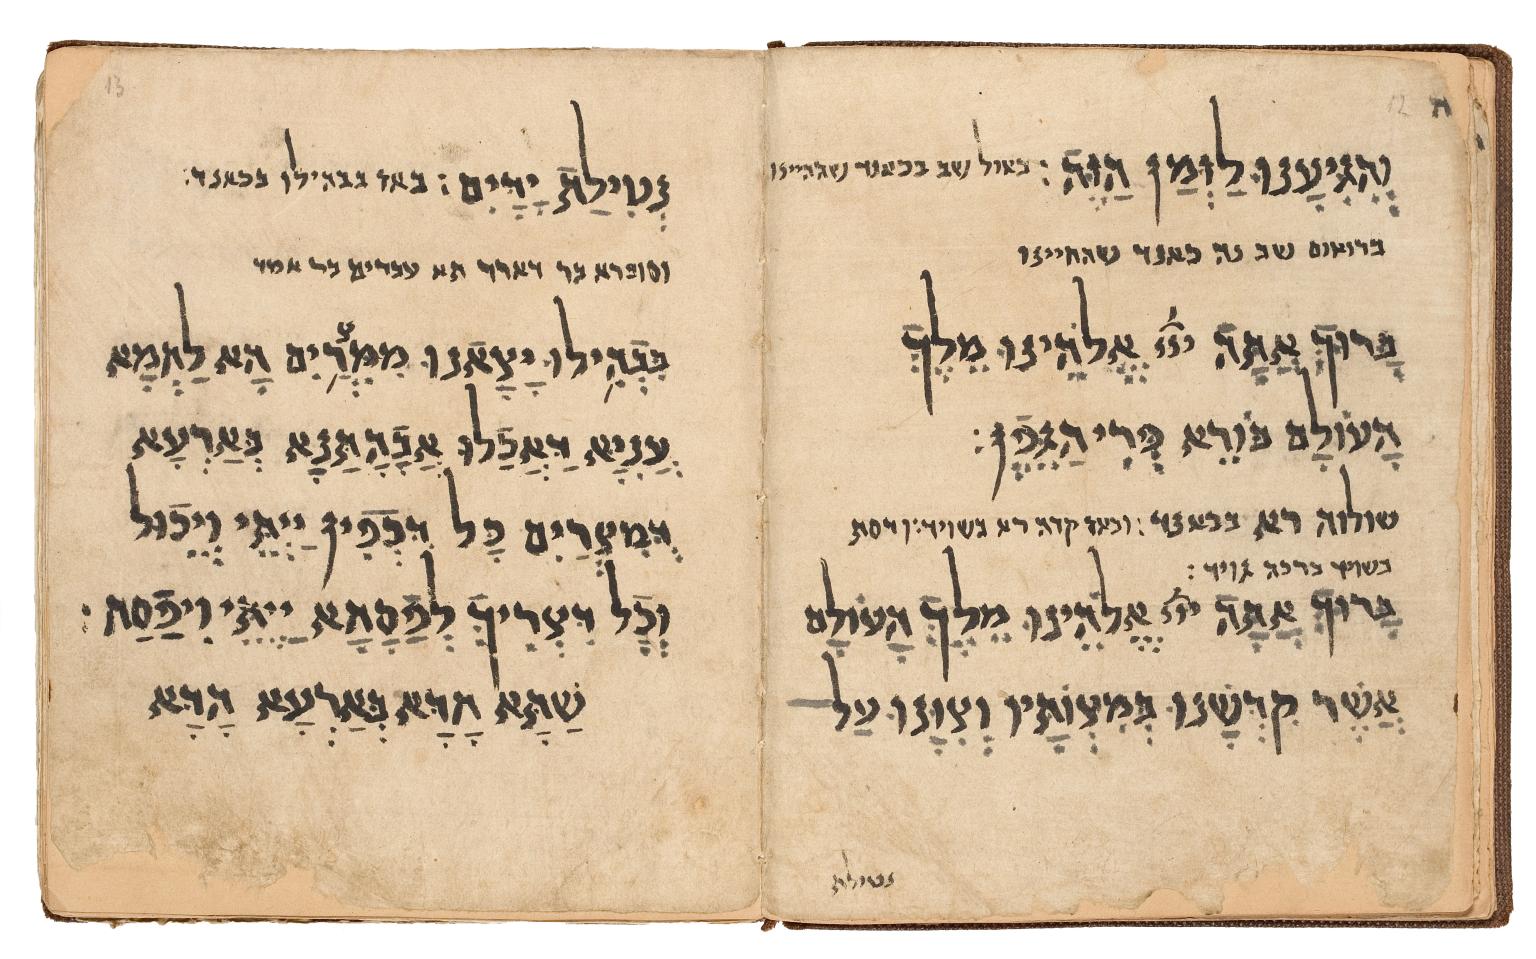 Facing-page manuscript with Judeo-Persian text. 